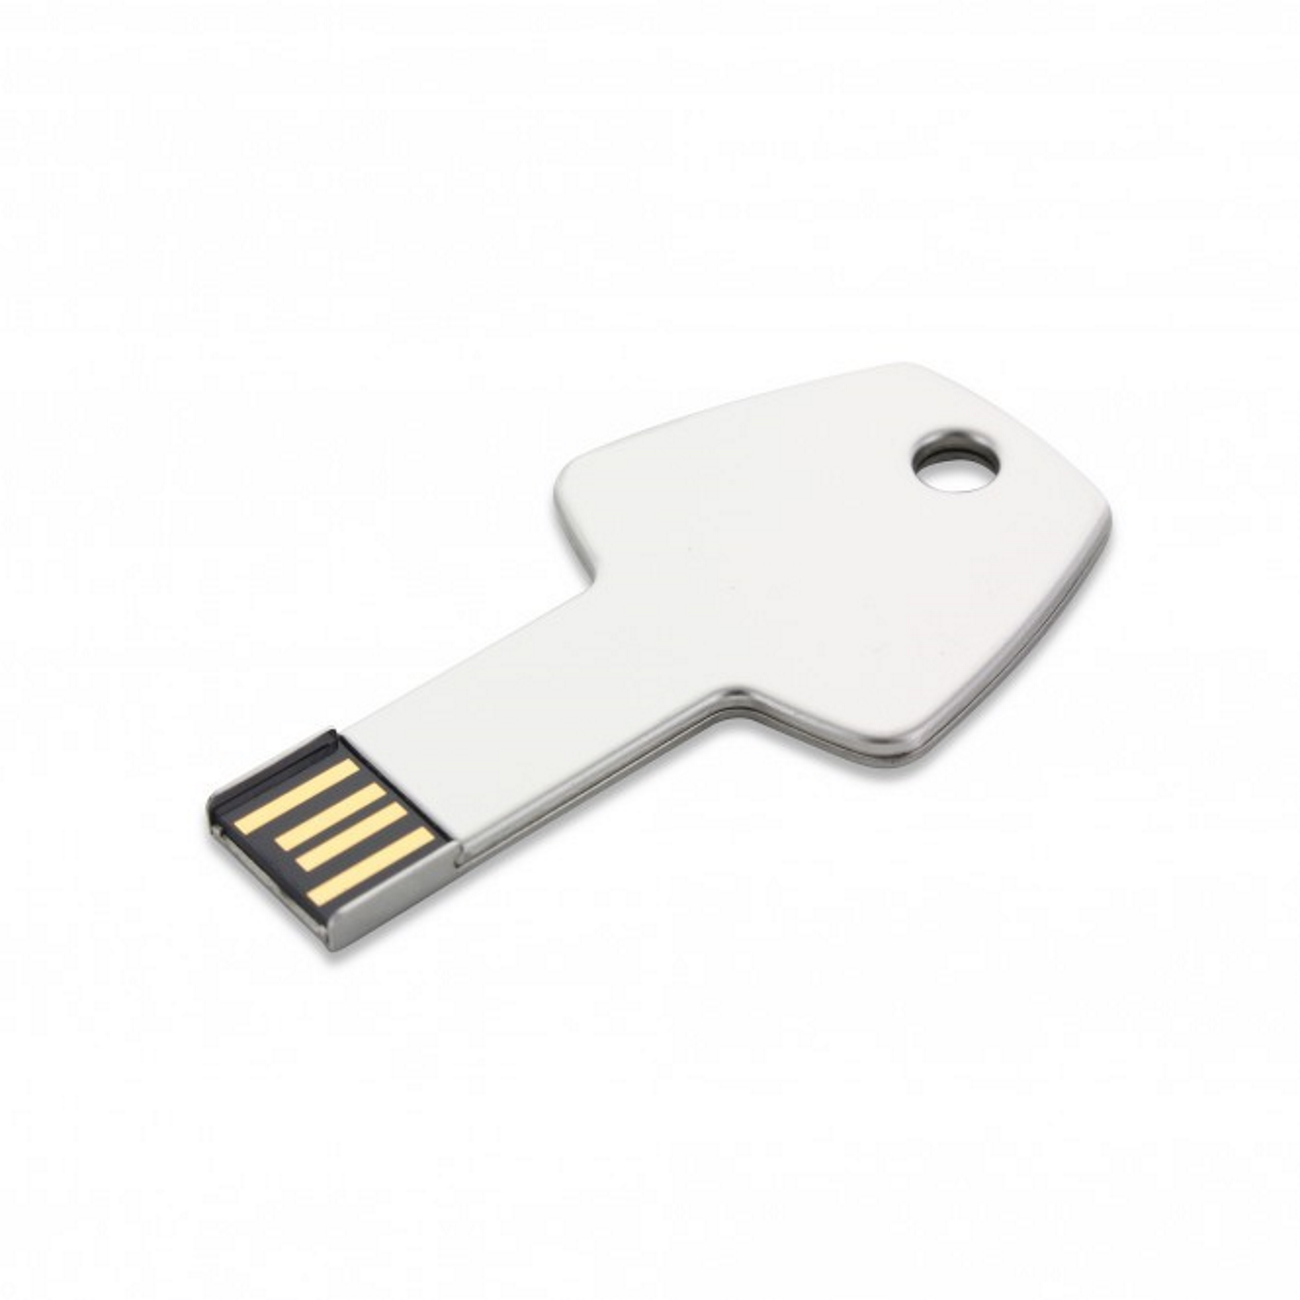 USB GERMANY (Silber, Key USB-Stick 16 GB) ®Schlüssel